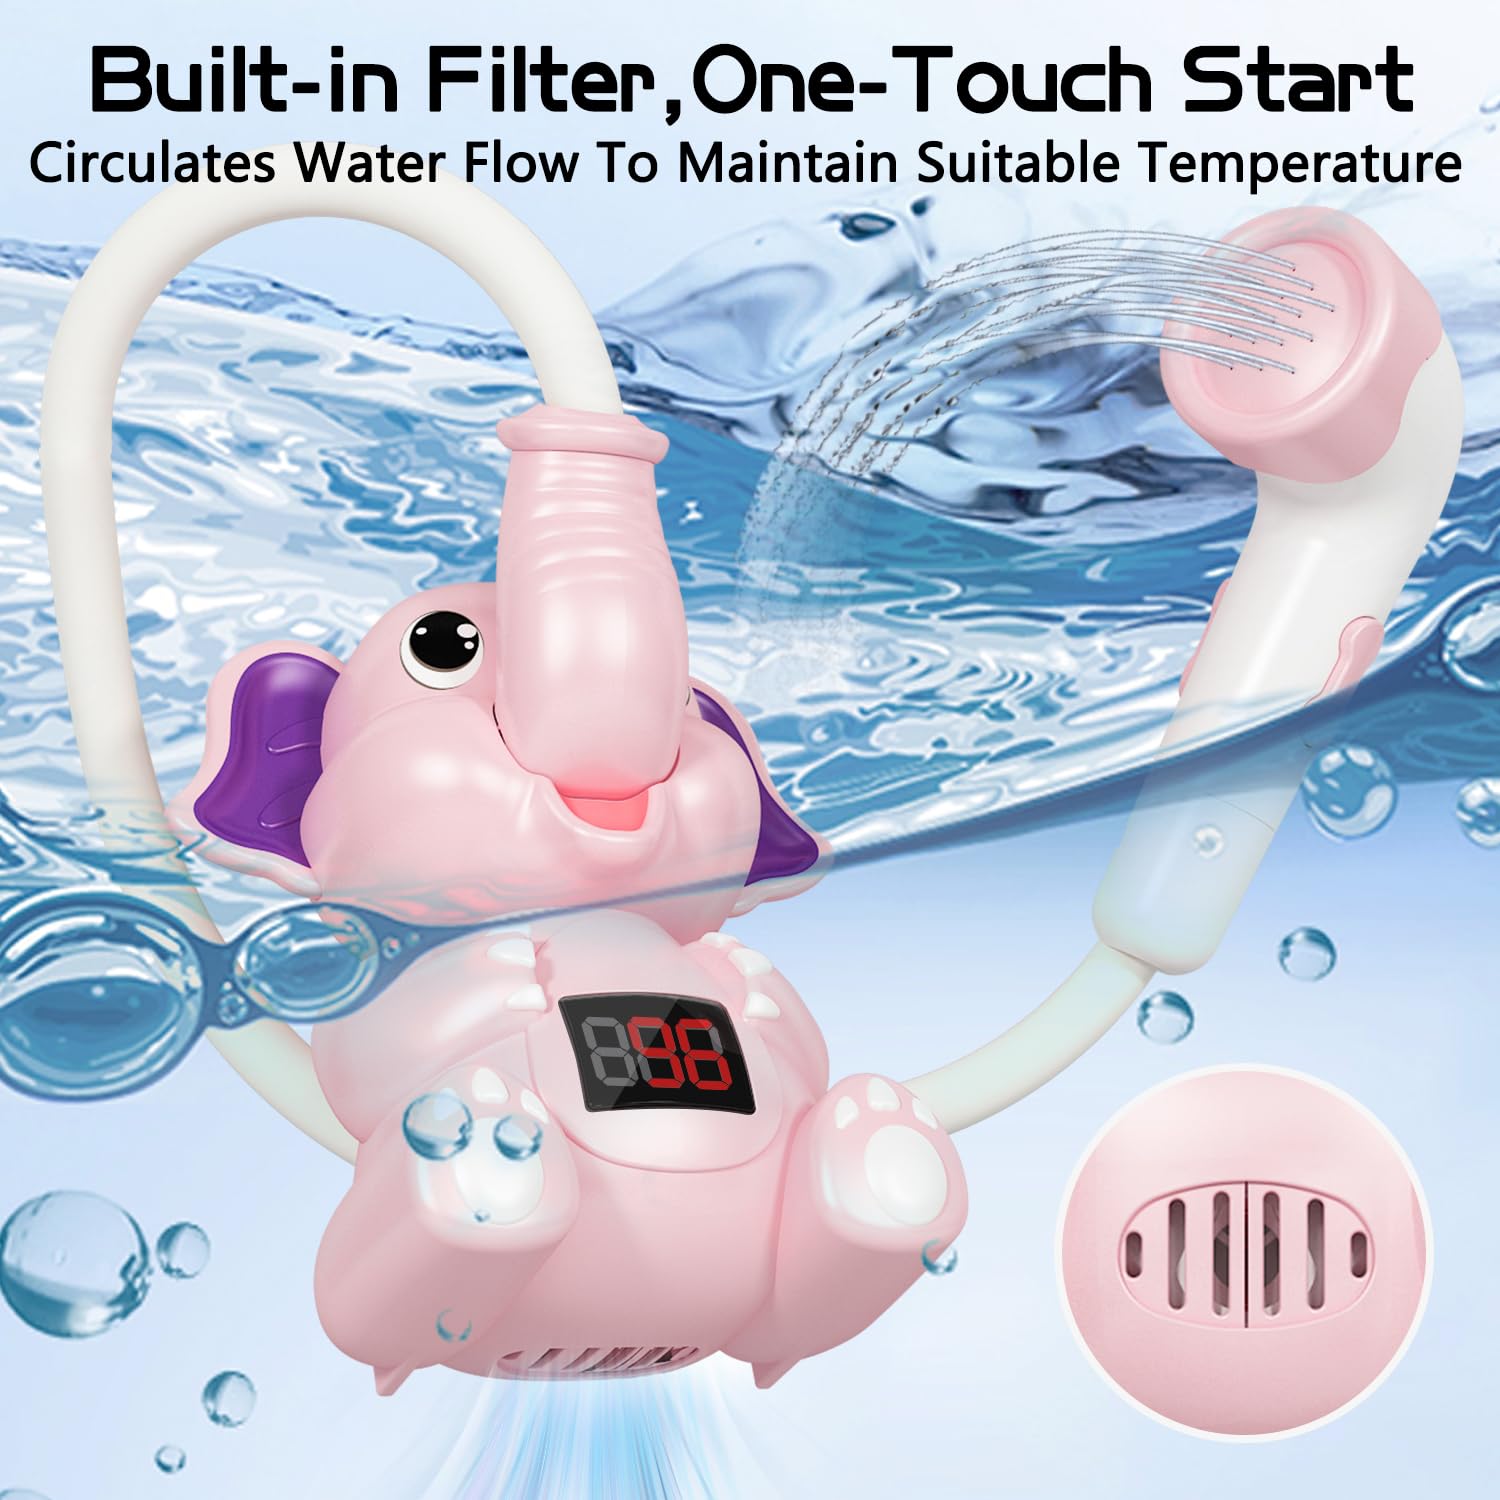 Baby Bath Toys Shower Head Elephant Design Bathtub Sprinkler with Digital LED Temperature Display,Baby Bath Essentials Birthday Gift for Newborn Infants Toddlers Babies 18+ Months - Gray